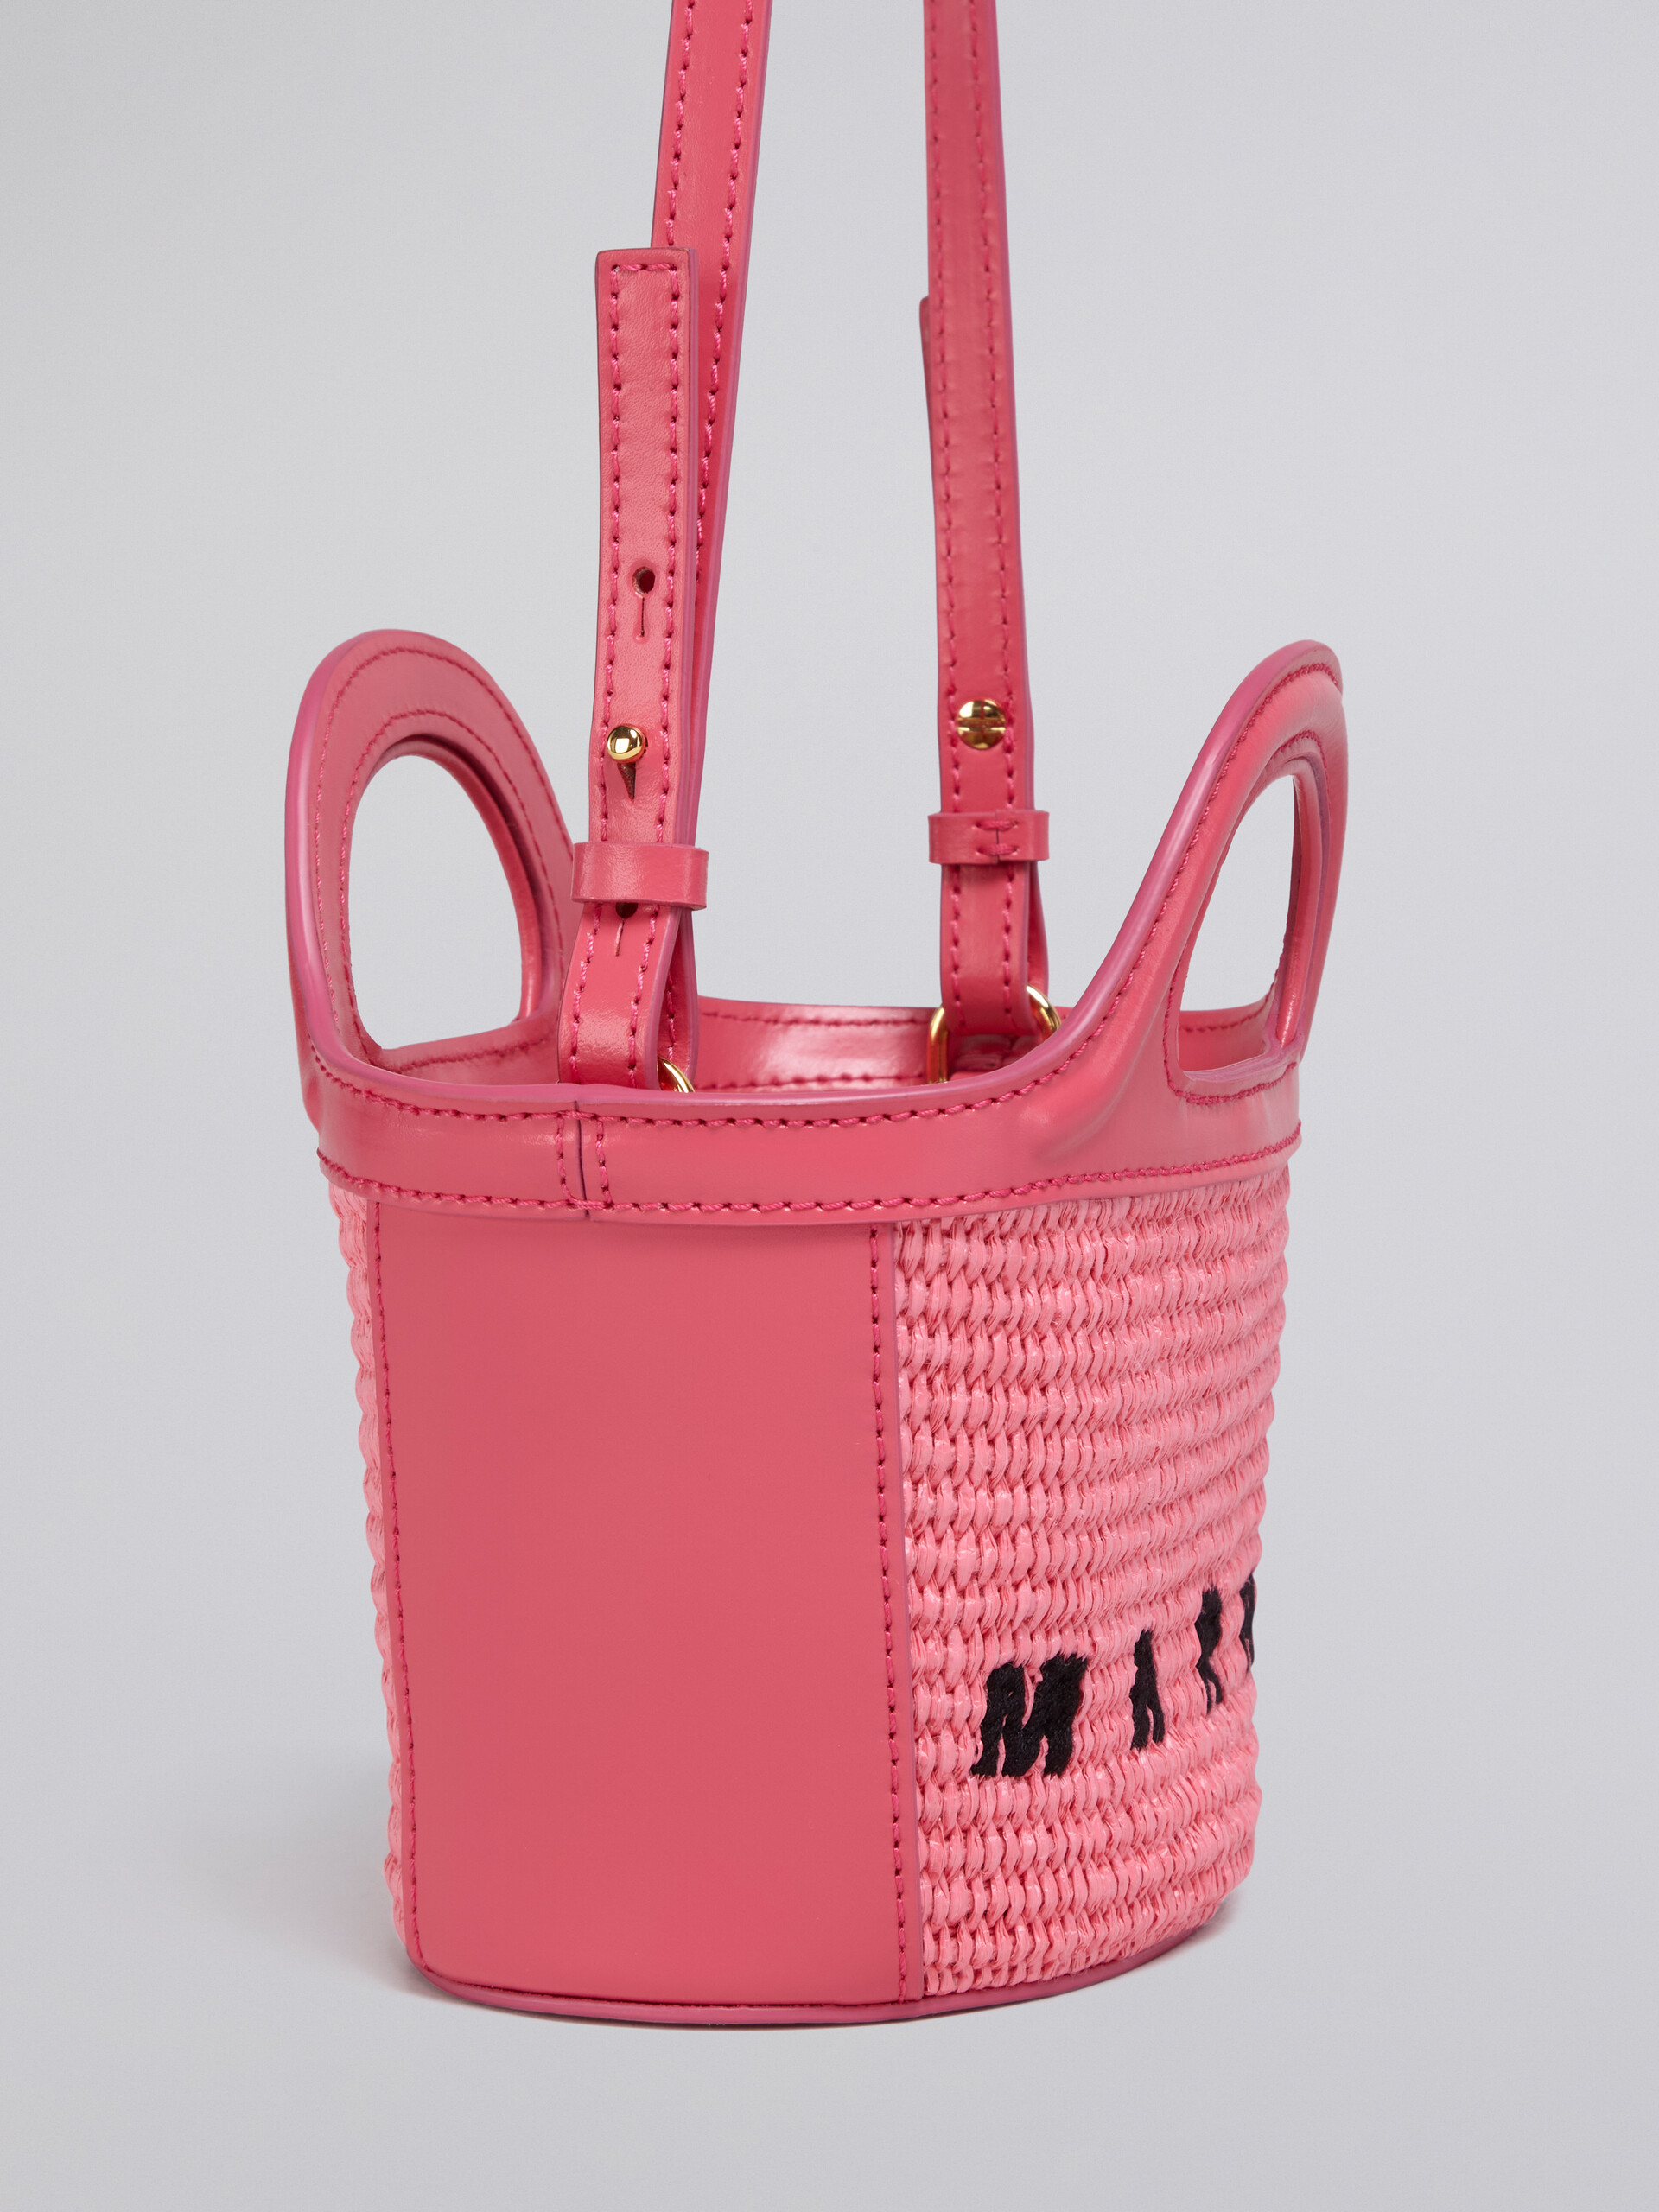 TROPICALIA micro bag in pink leather and raffia - Handbag - Image 5